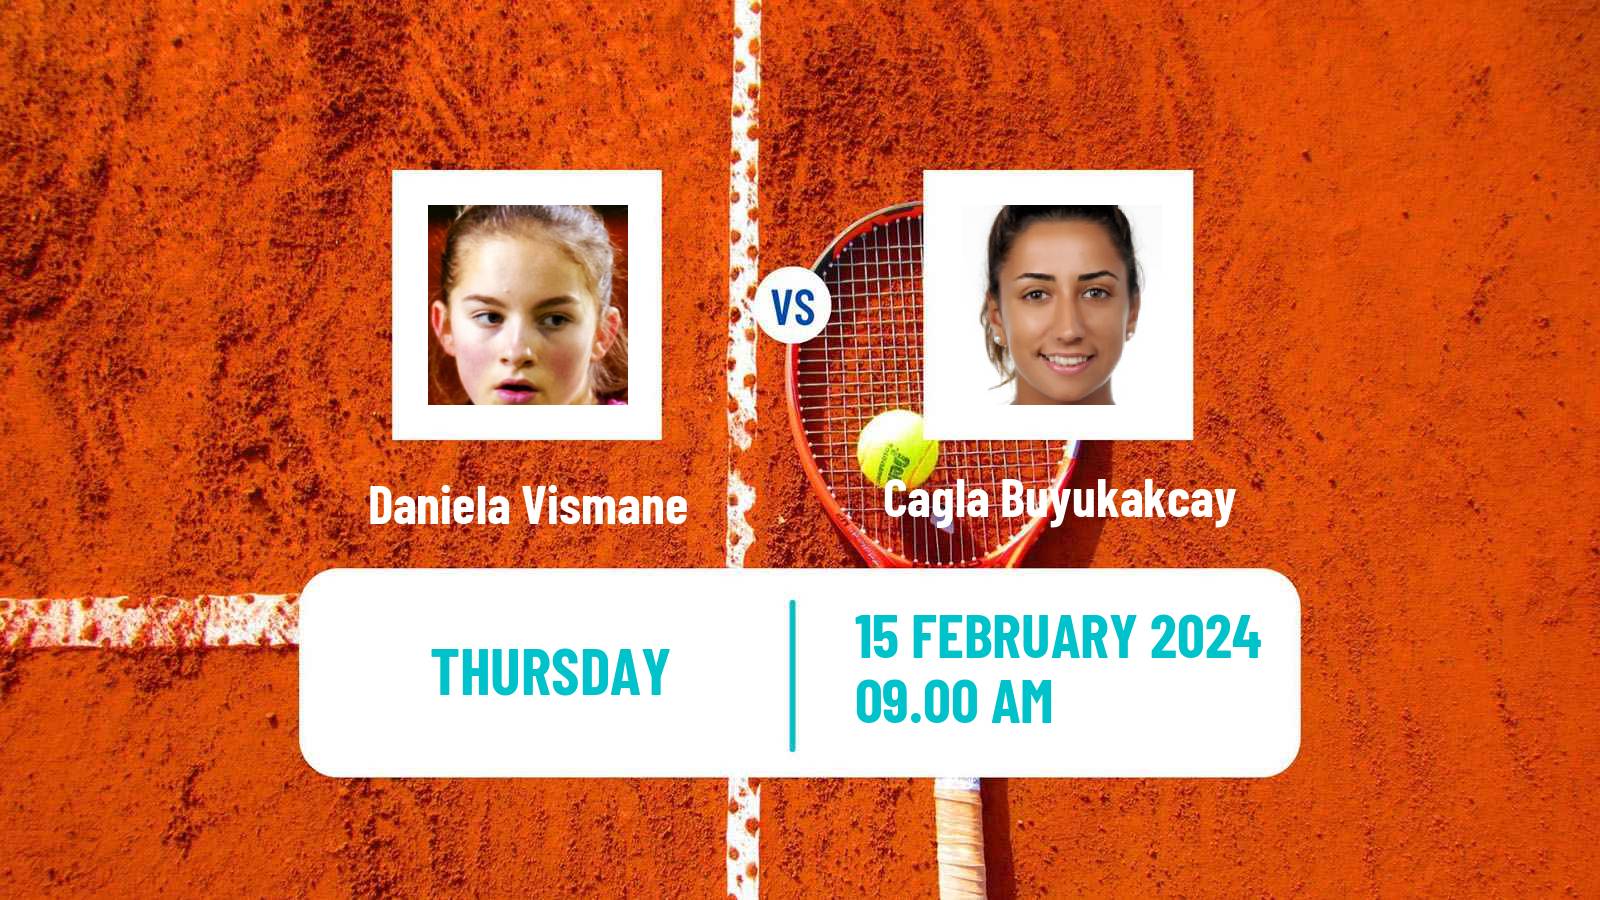 Tennis ITF W35 Antalya 3 Women Daniela Vismane - Cagla Buyukakcay